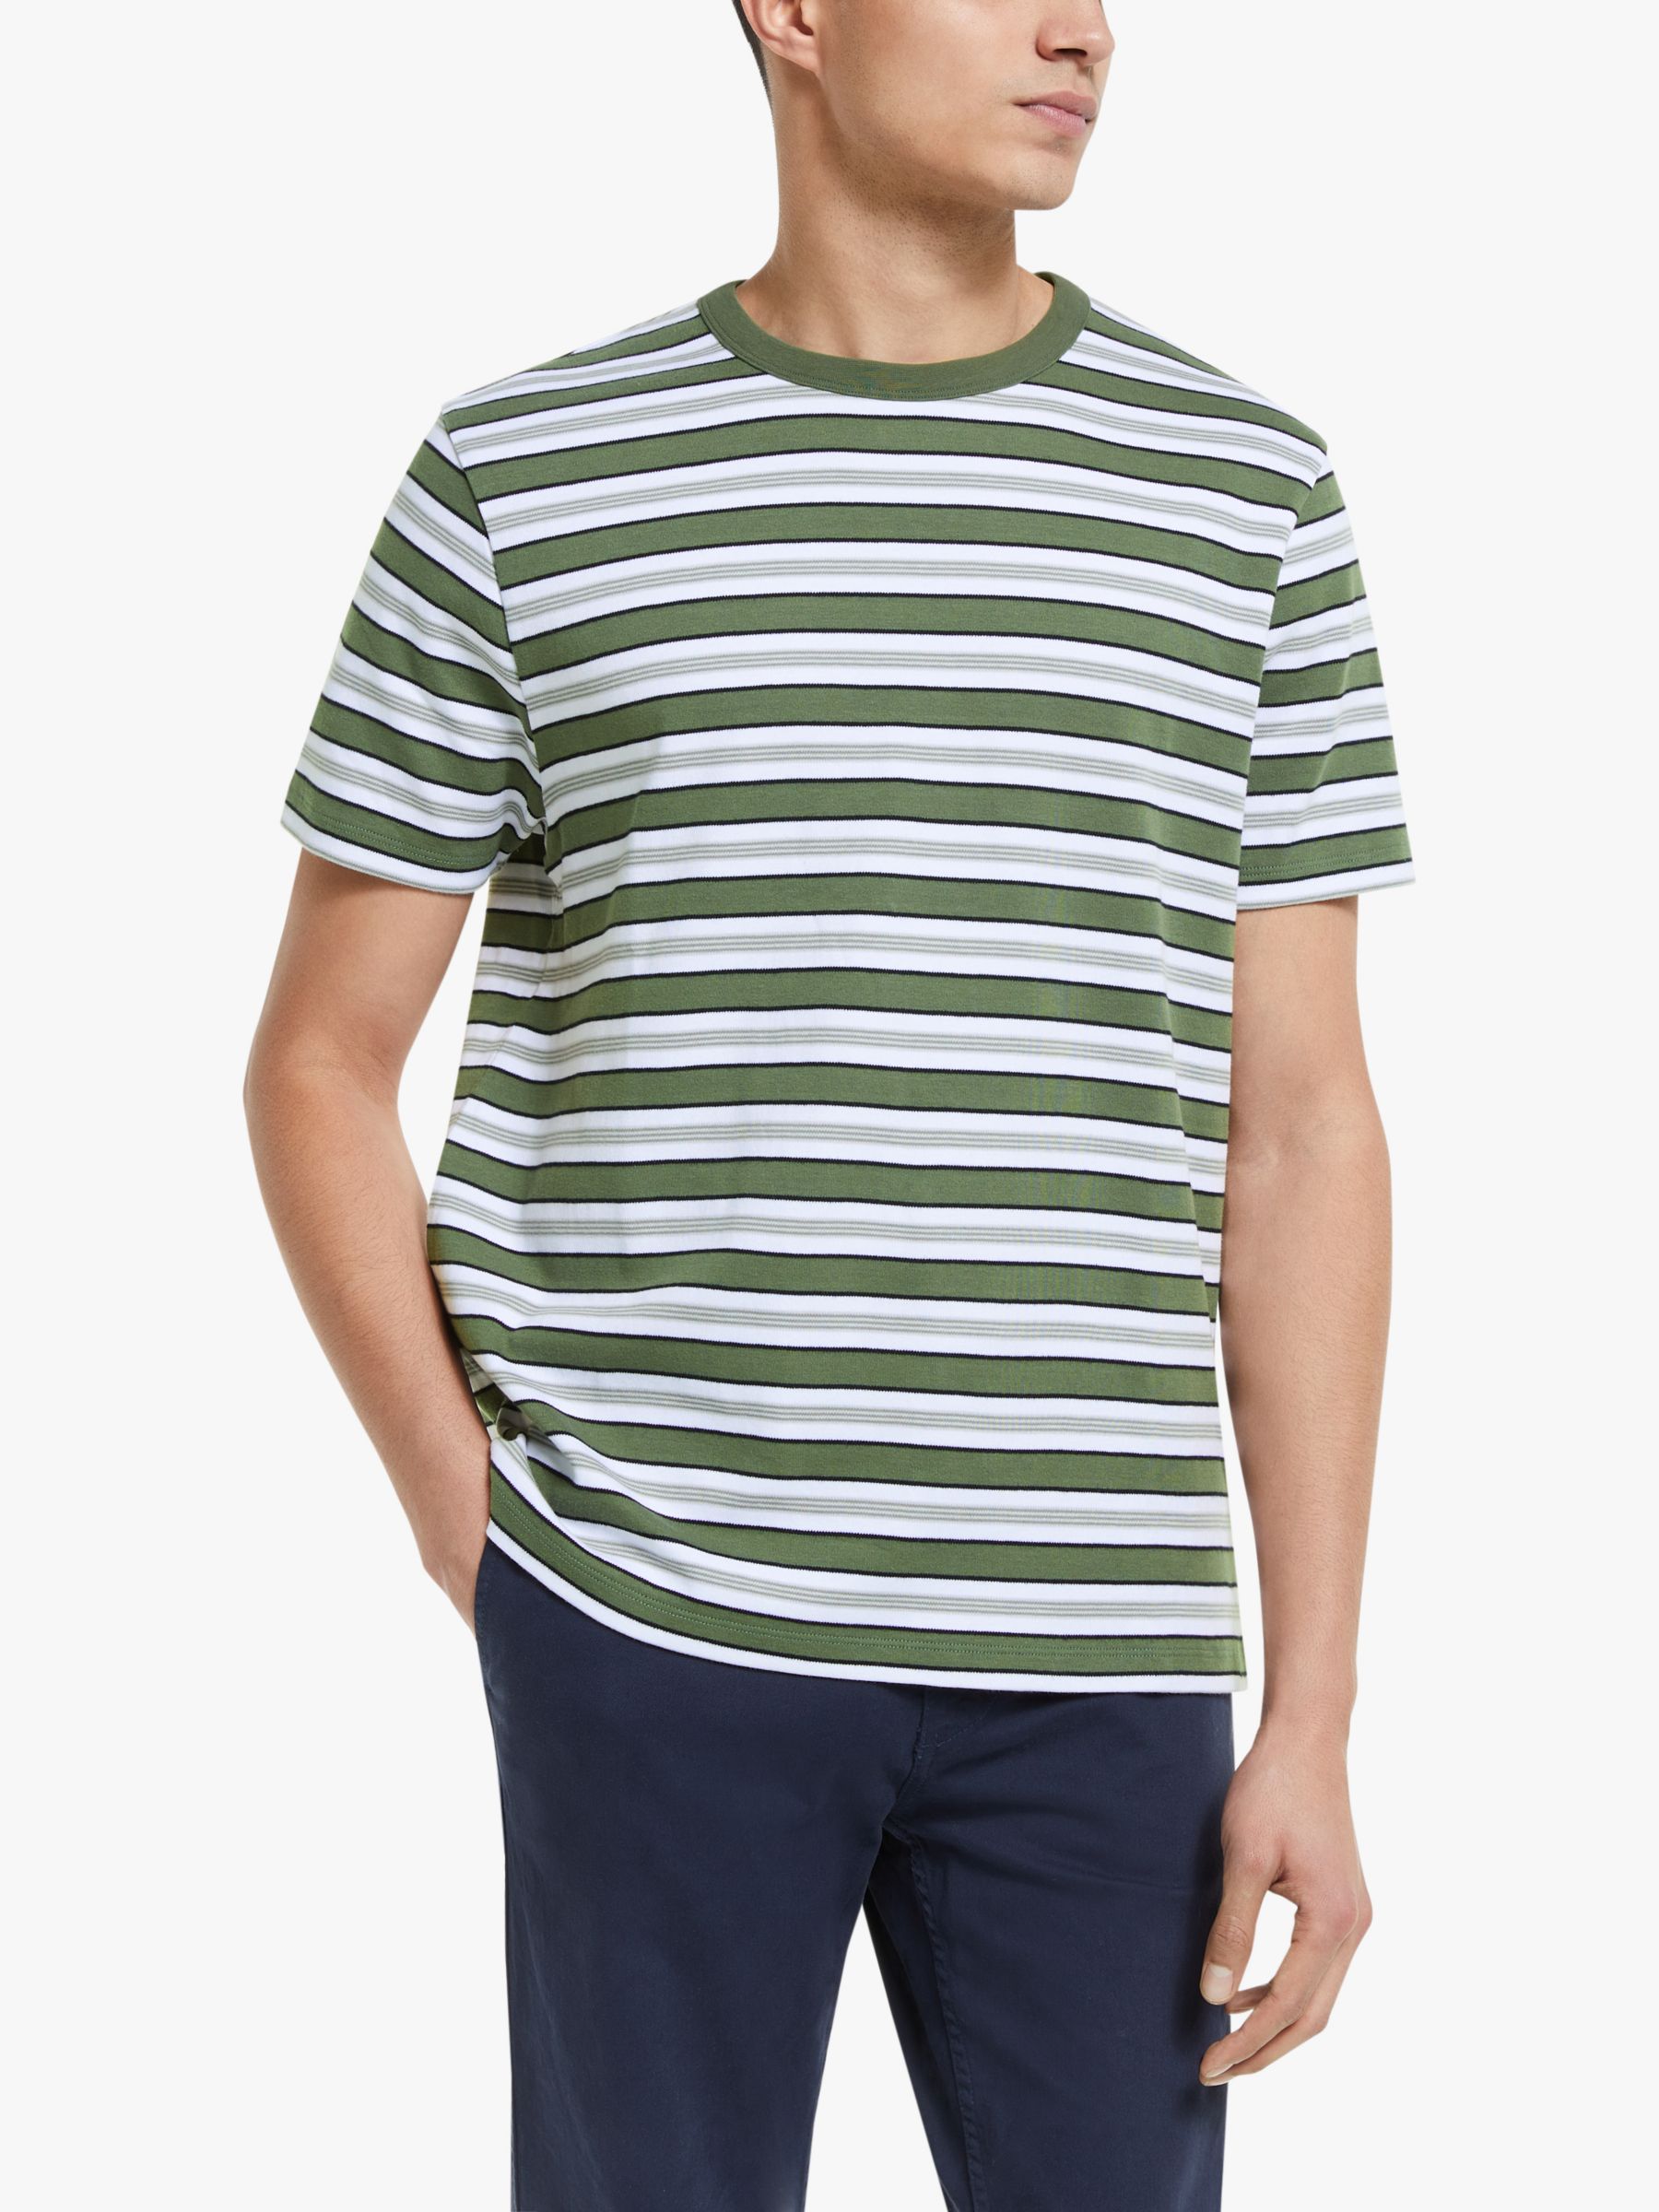 Wax London Duval Stripe Short Sleeve T-Shirt